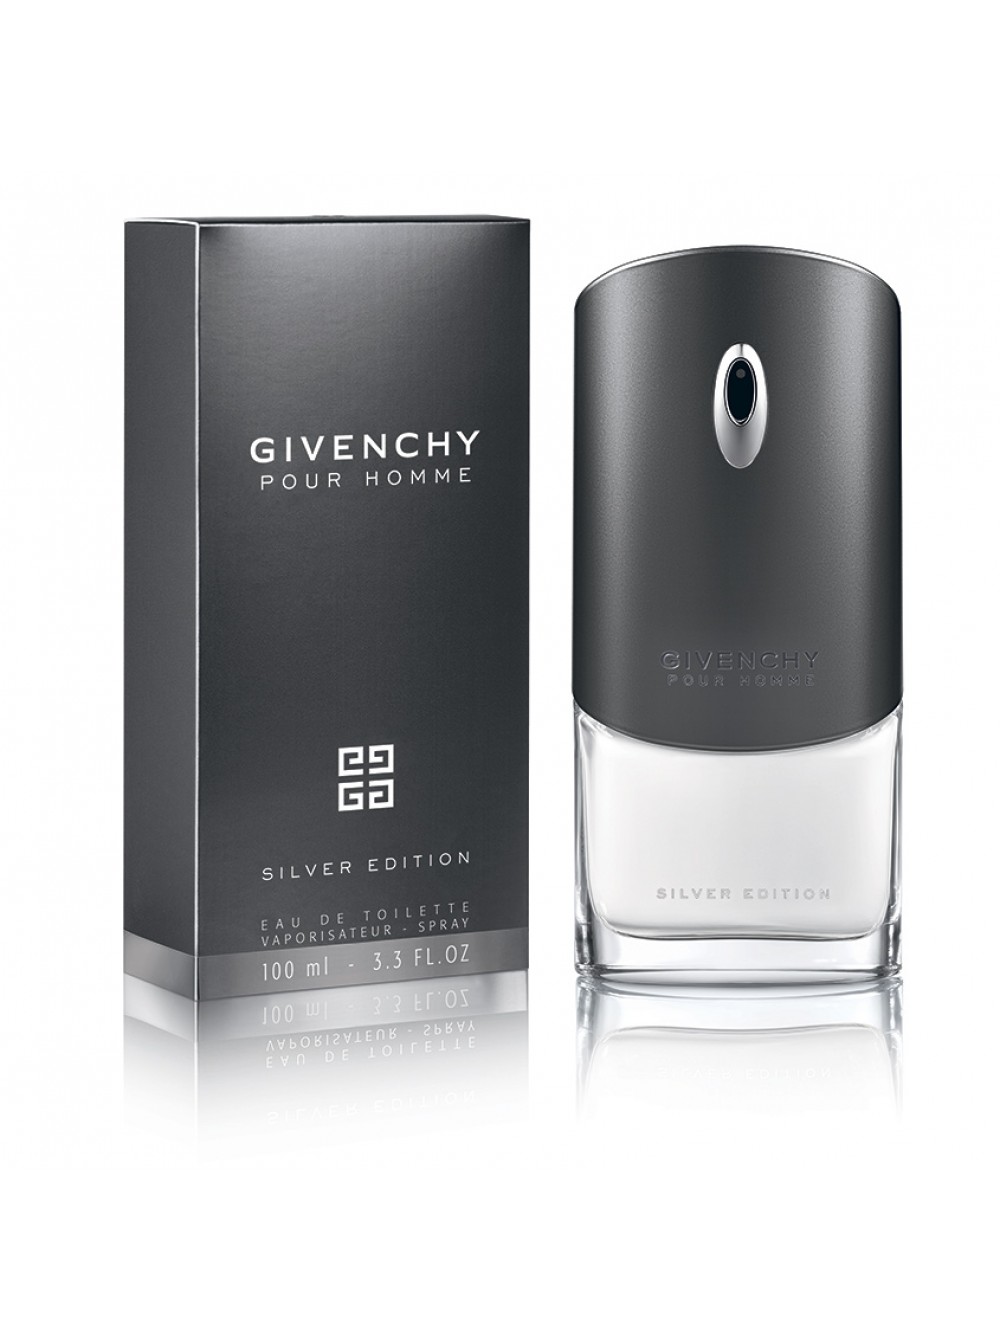 Givenchy Givenchy pour homme, 100 ml. Givenchy pour homme Silver Edition. Givenchy pour homme 100ml мужские. Живанши хом мужские